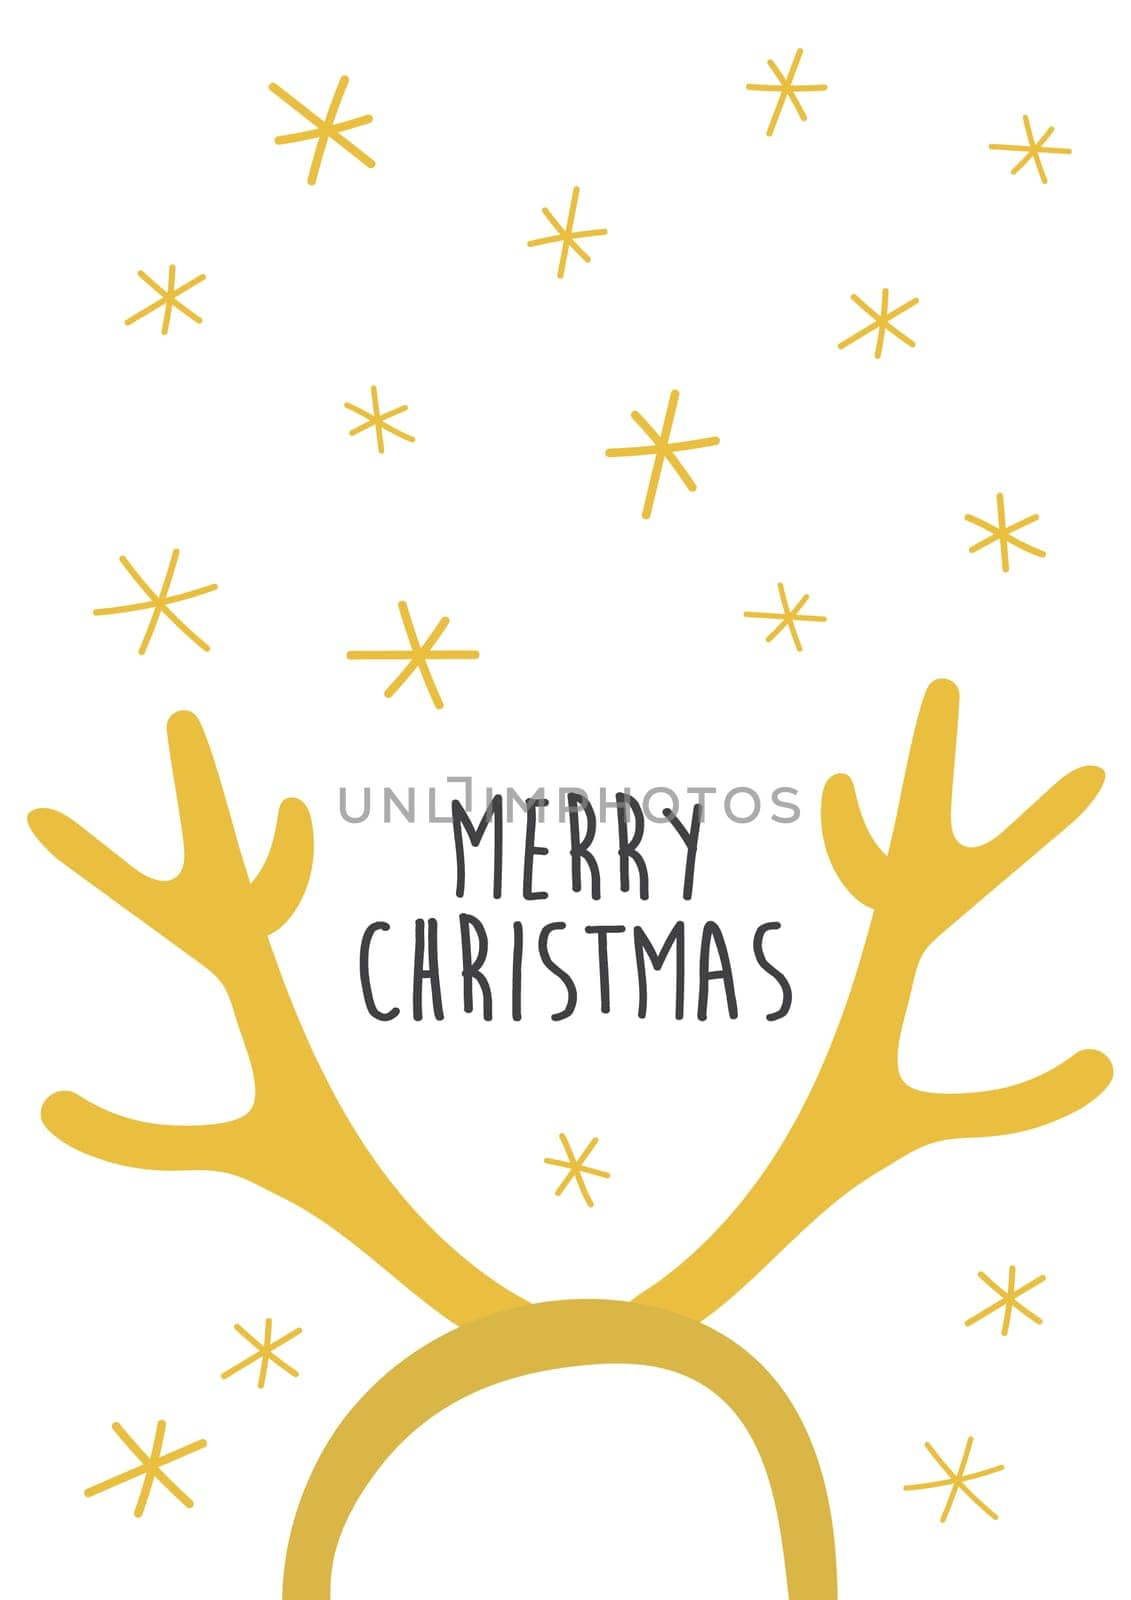 Merry Christmas greeting card design. Reindeer antlers horns. Cartoon illustration. Minimalist Scandinavian design on white